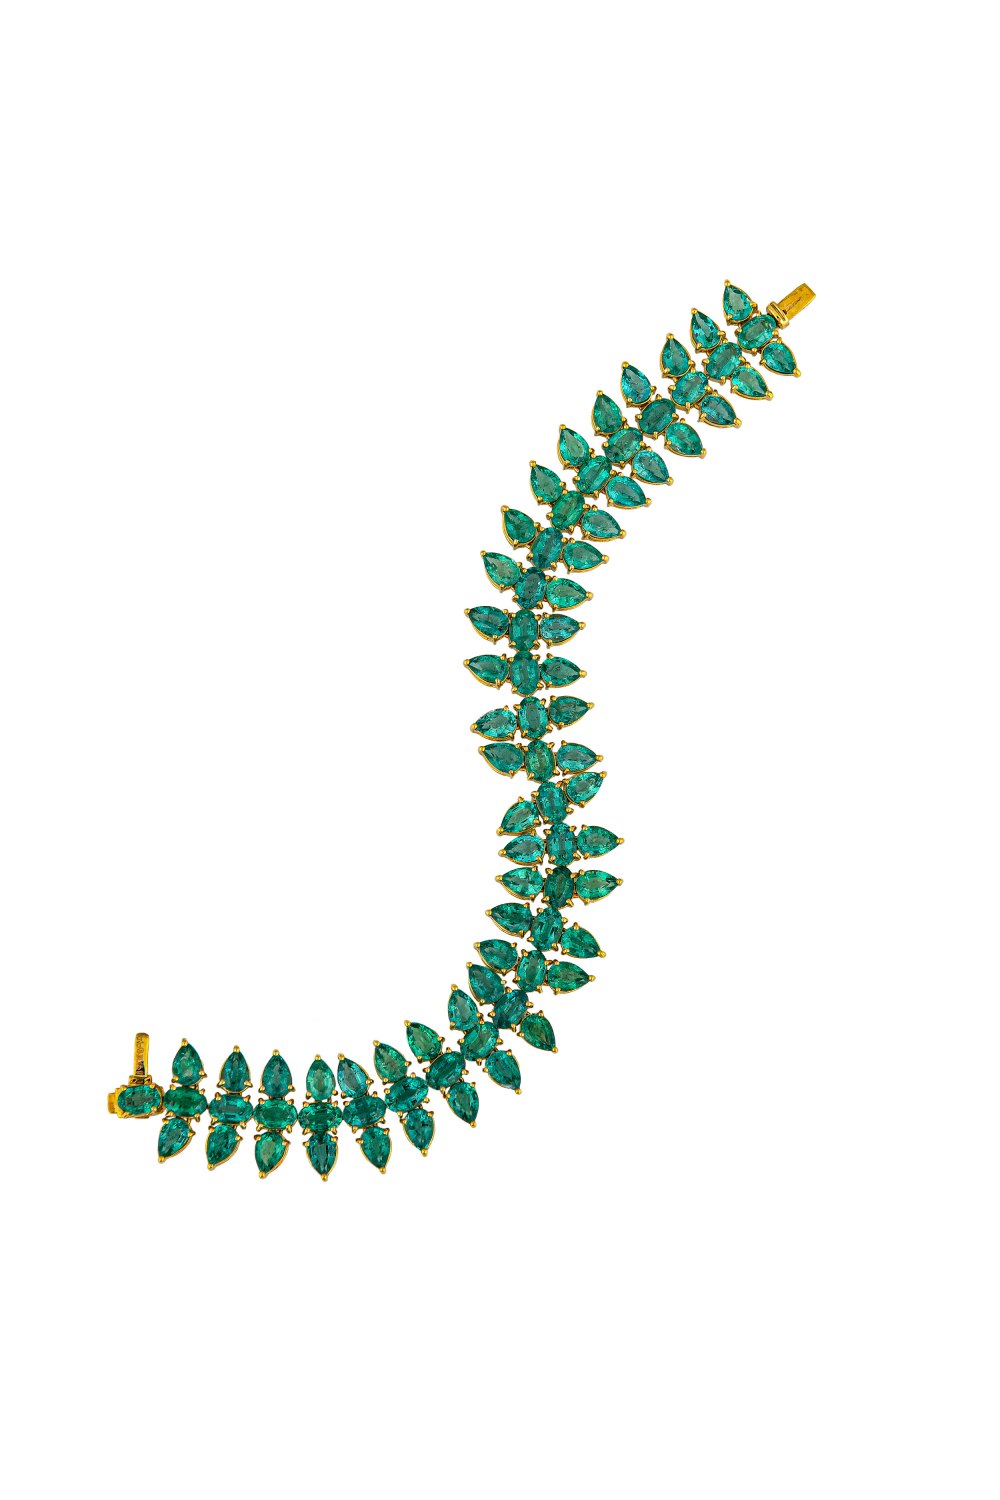 LA TACHE BOBO - Emerald Bracelet